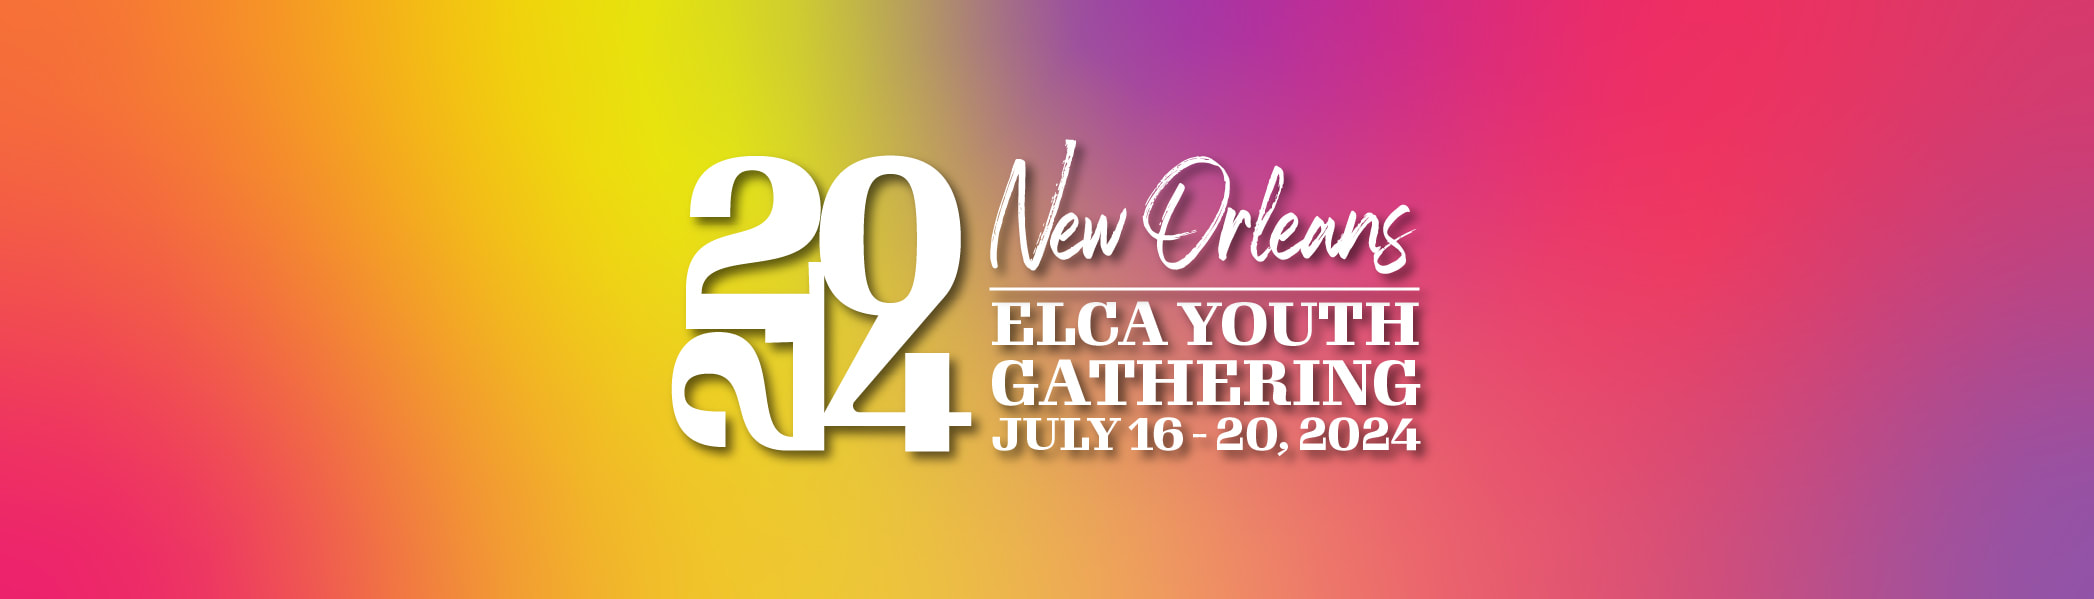 ELCA Youth Gathering 2024 ELCA FAITH FORMATION